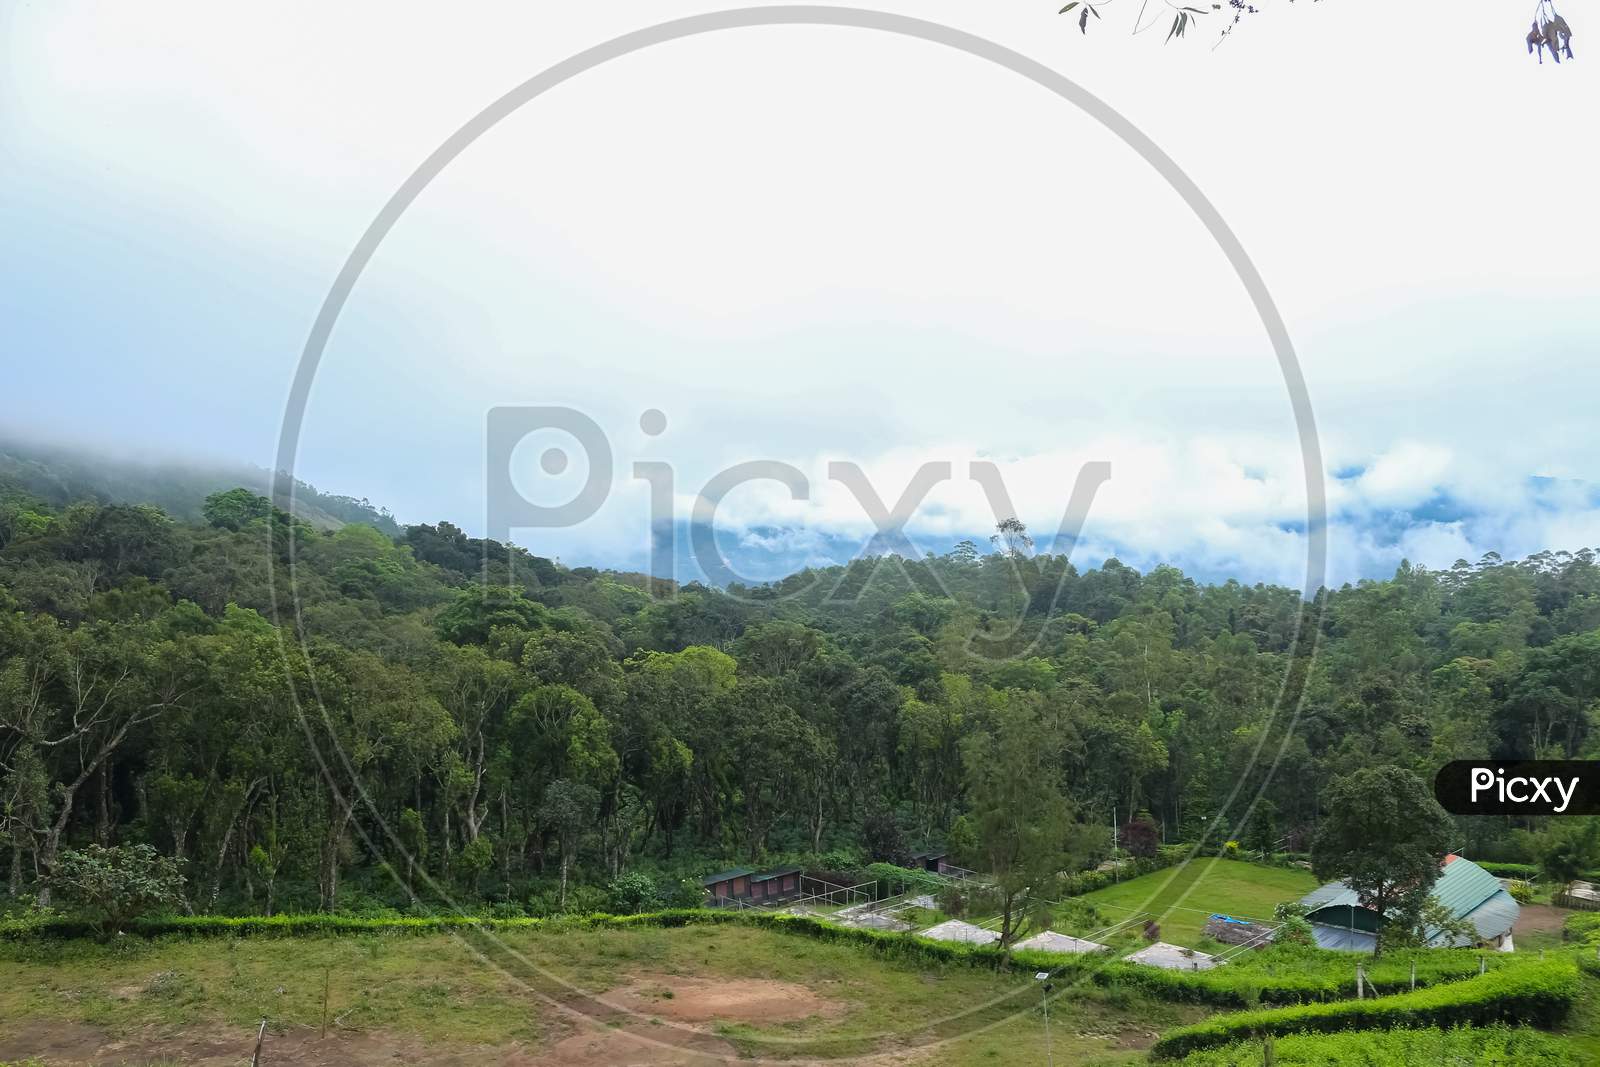 Munnar Garden And Tea Plantation . Tea Plantations In Munnar, Kerala, India. Stock Images